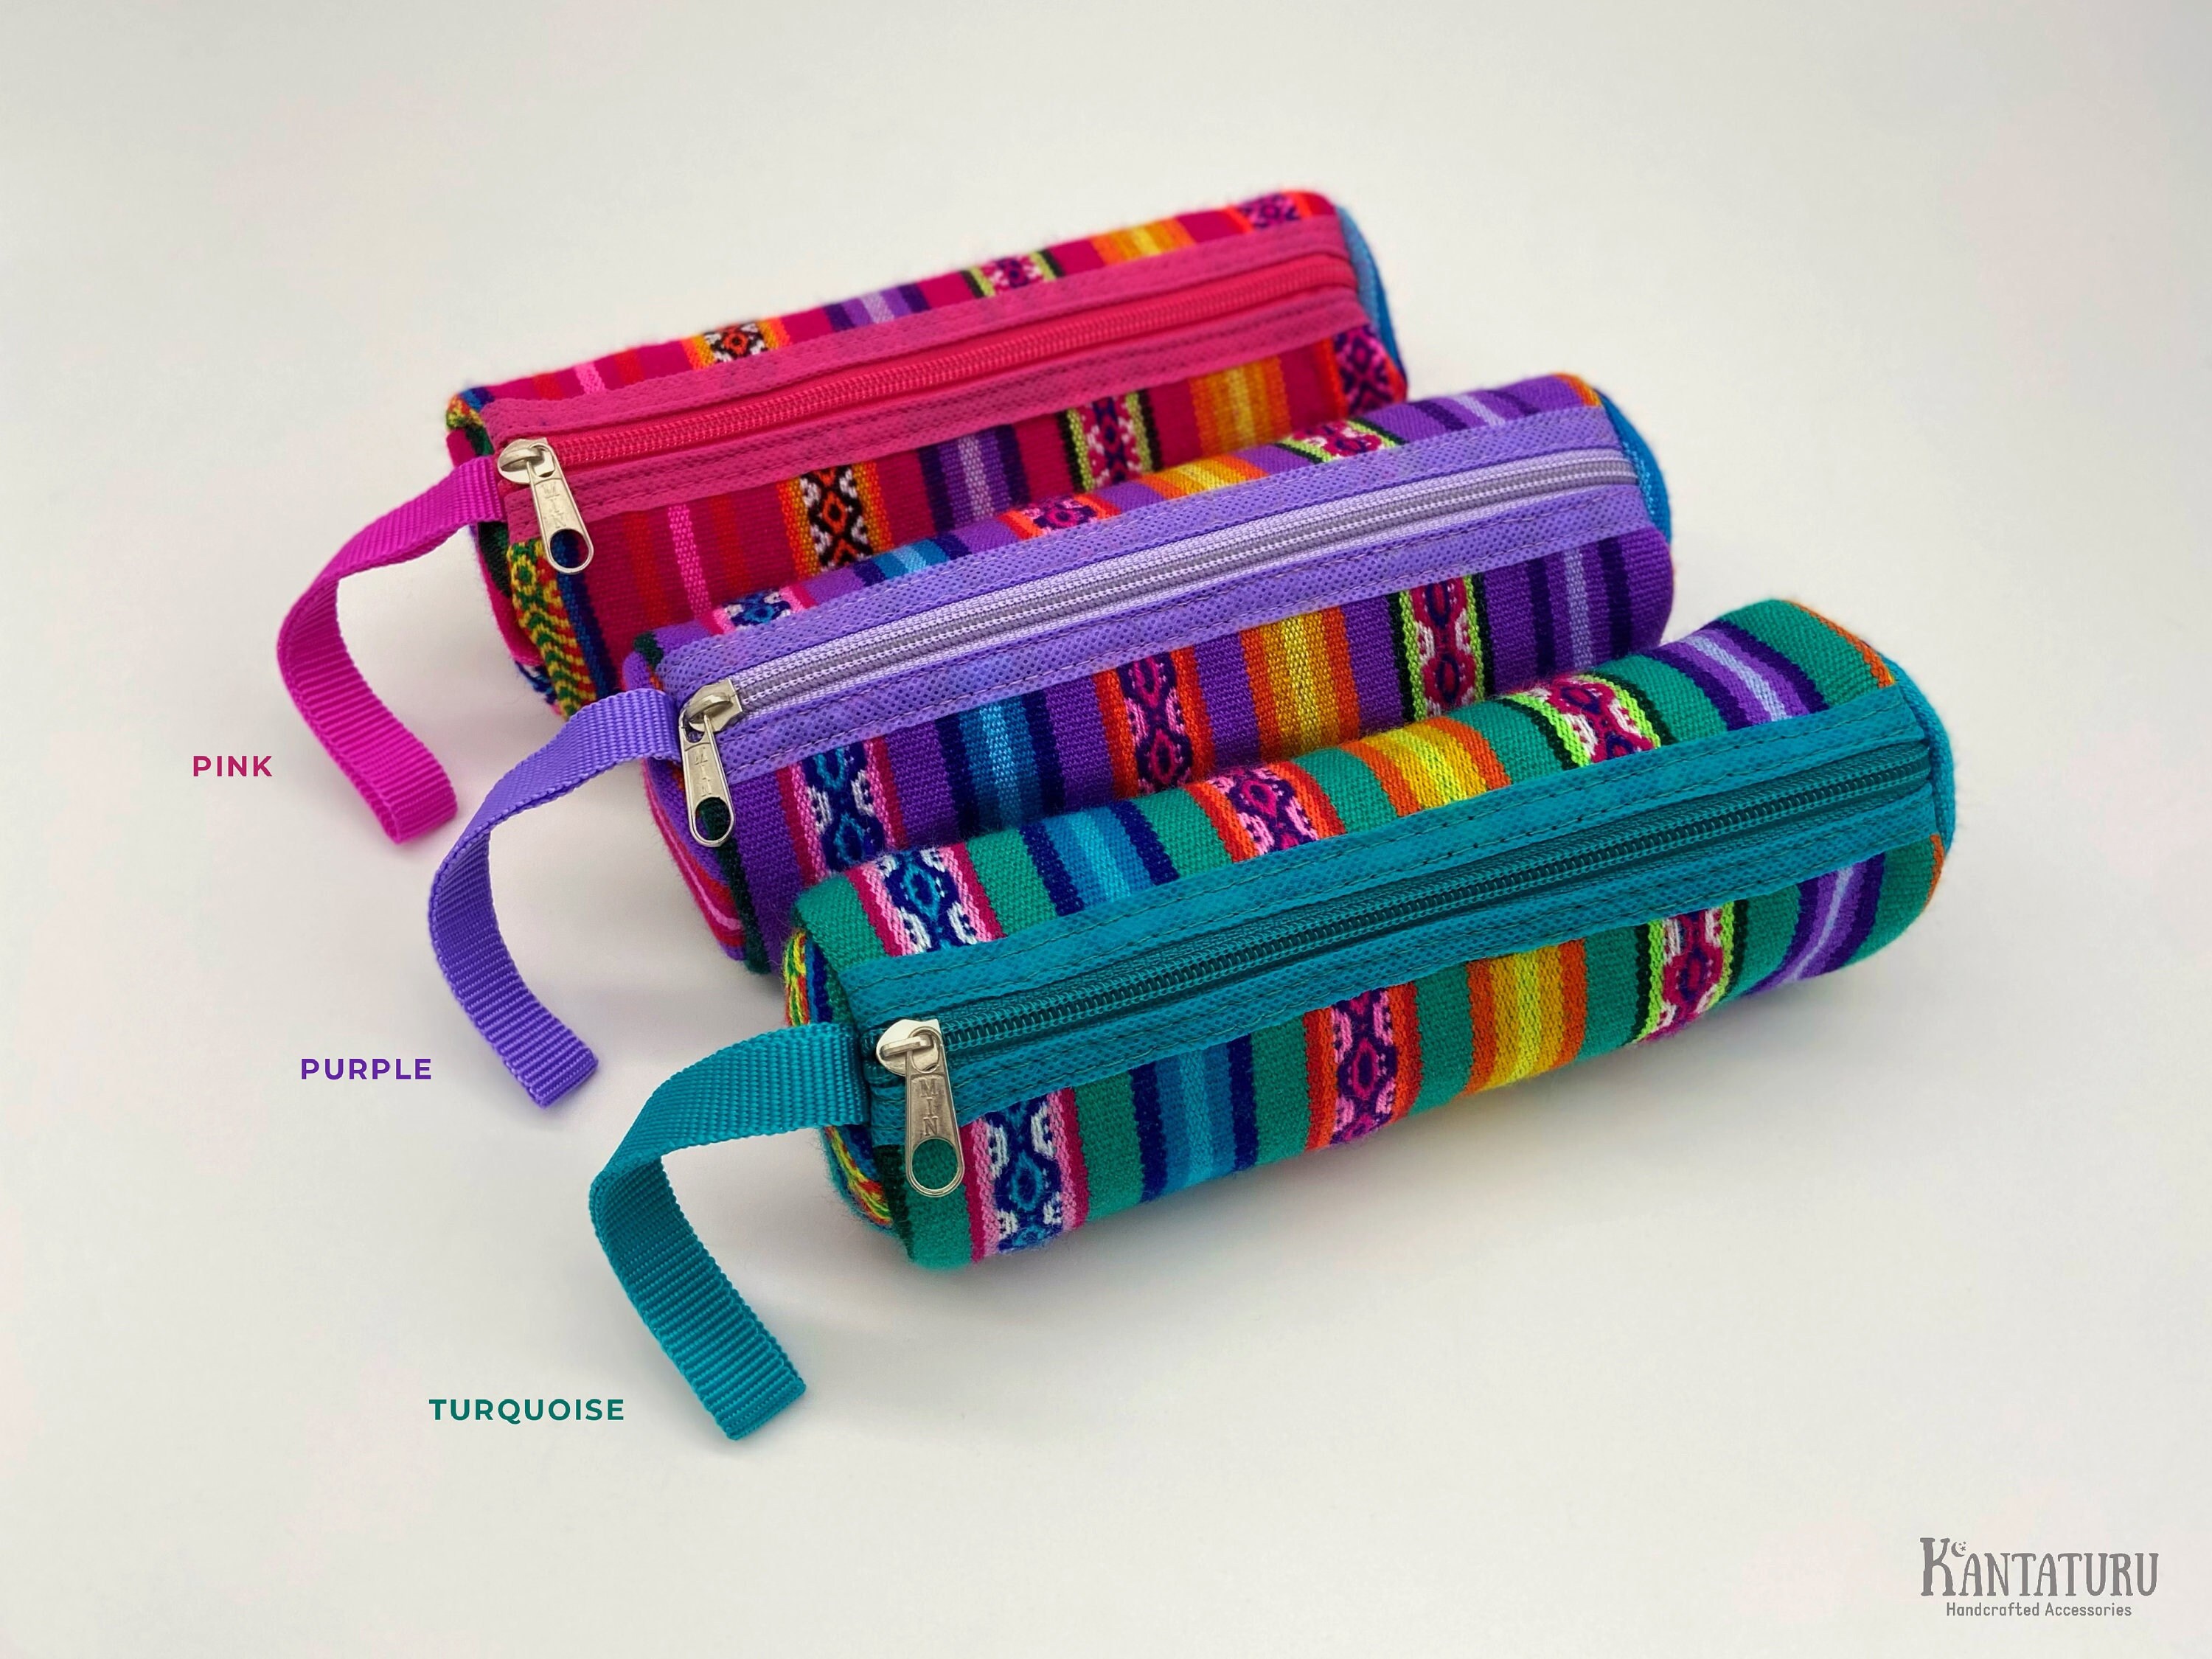 wool felt pencil/pen case – Gifts for Designers